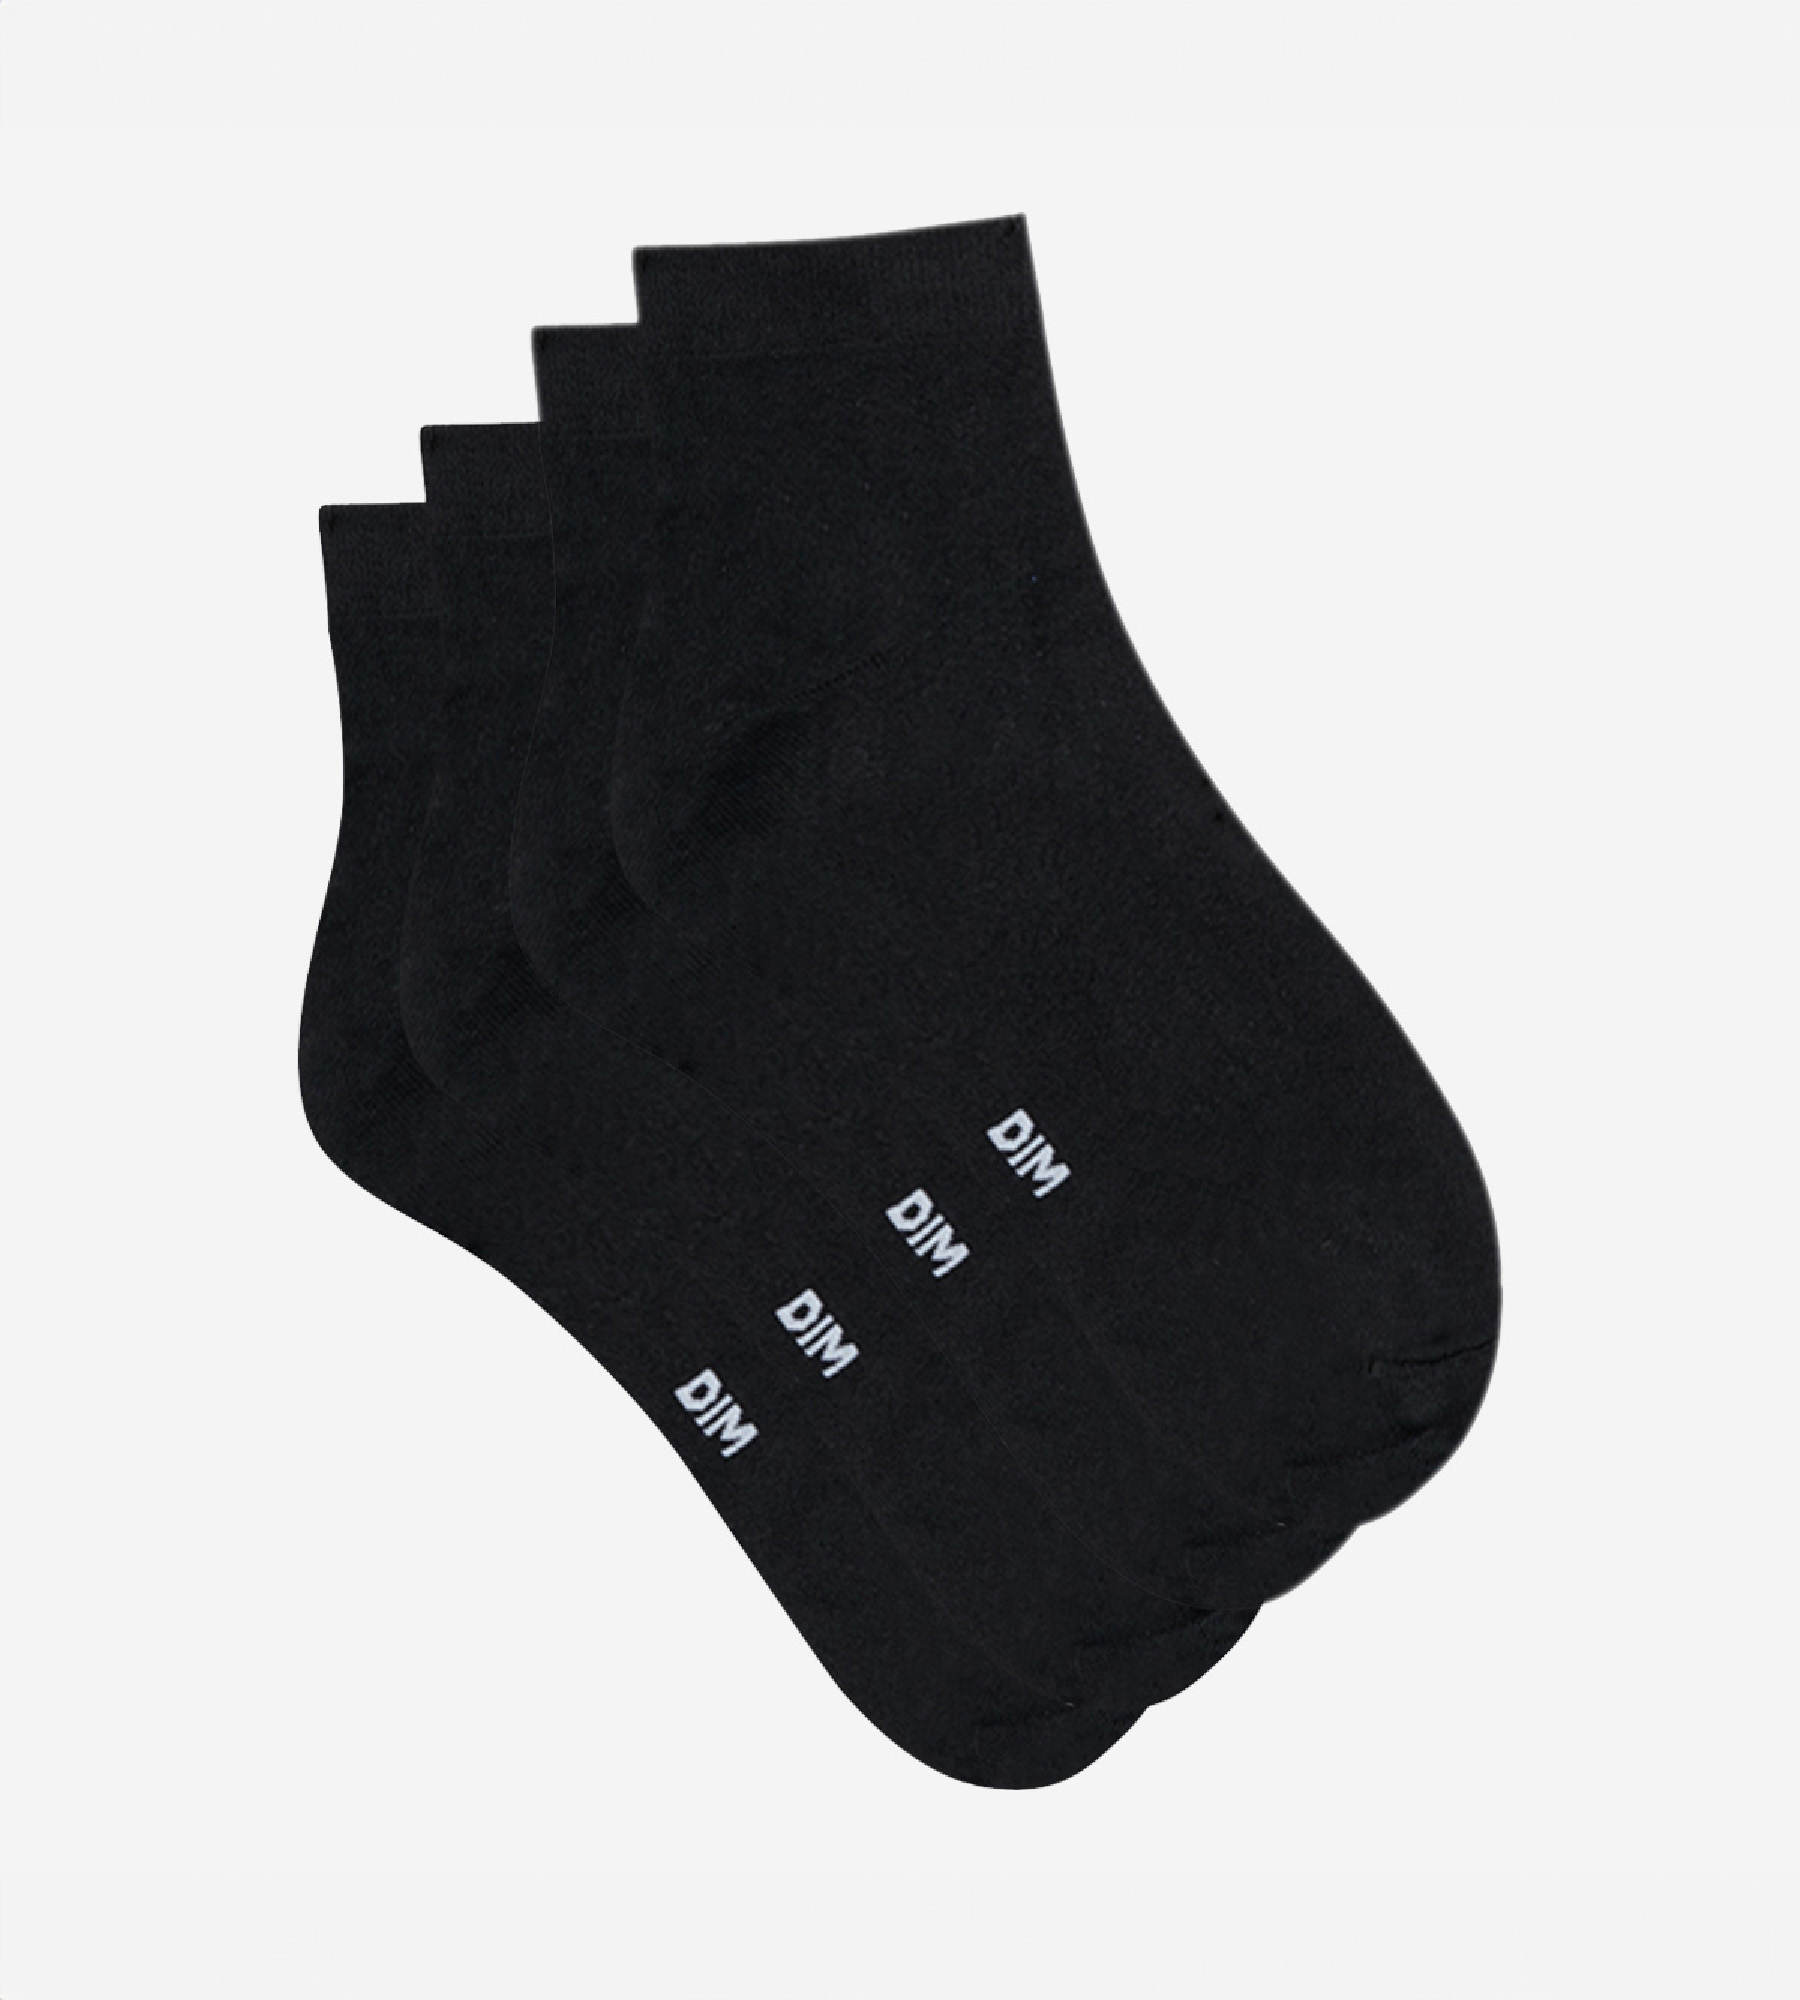 2 pack black and blue women's ankle socks - Dim Basic Coton